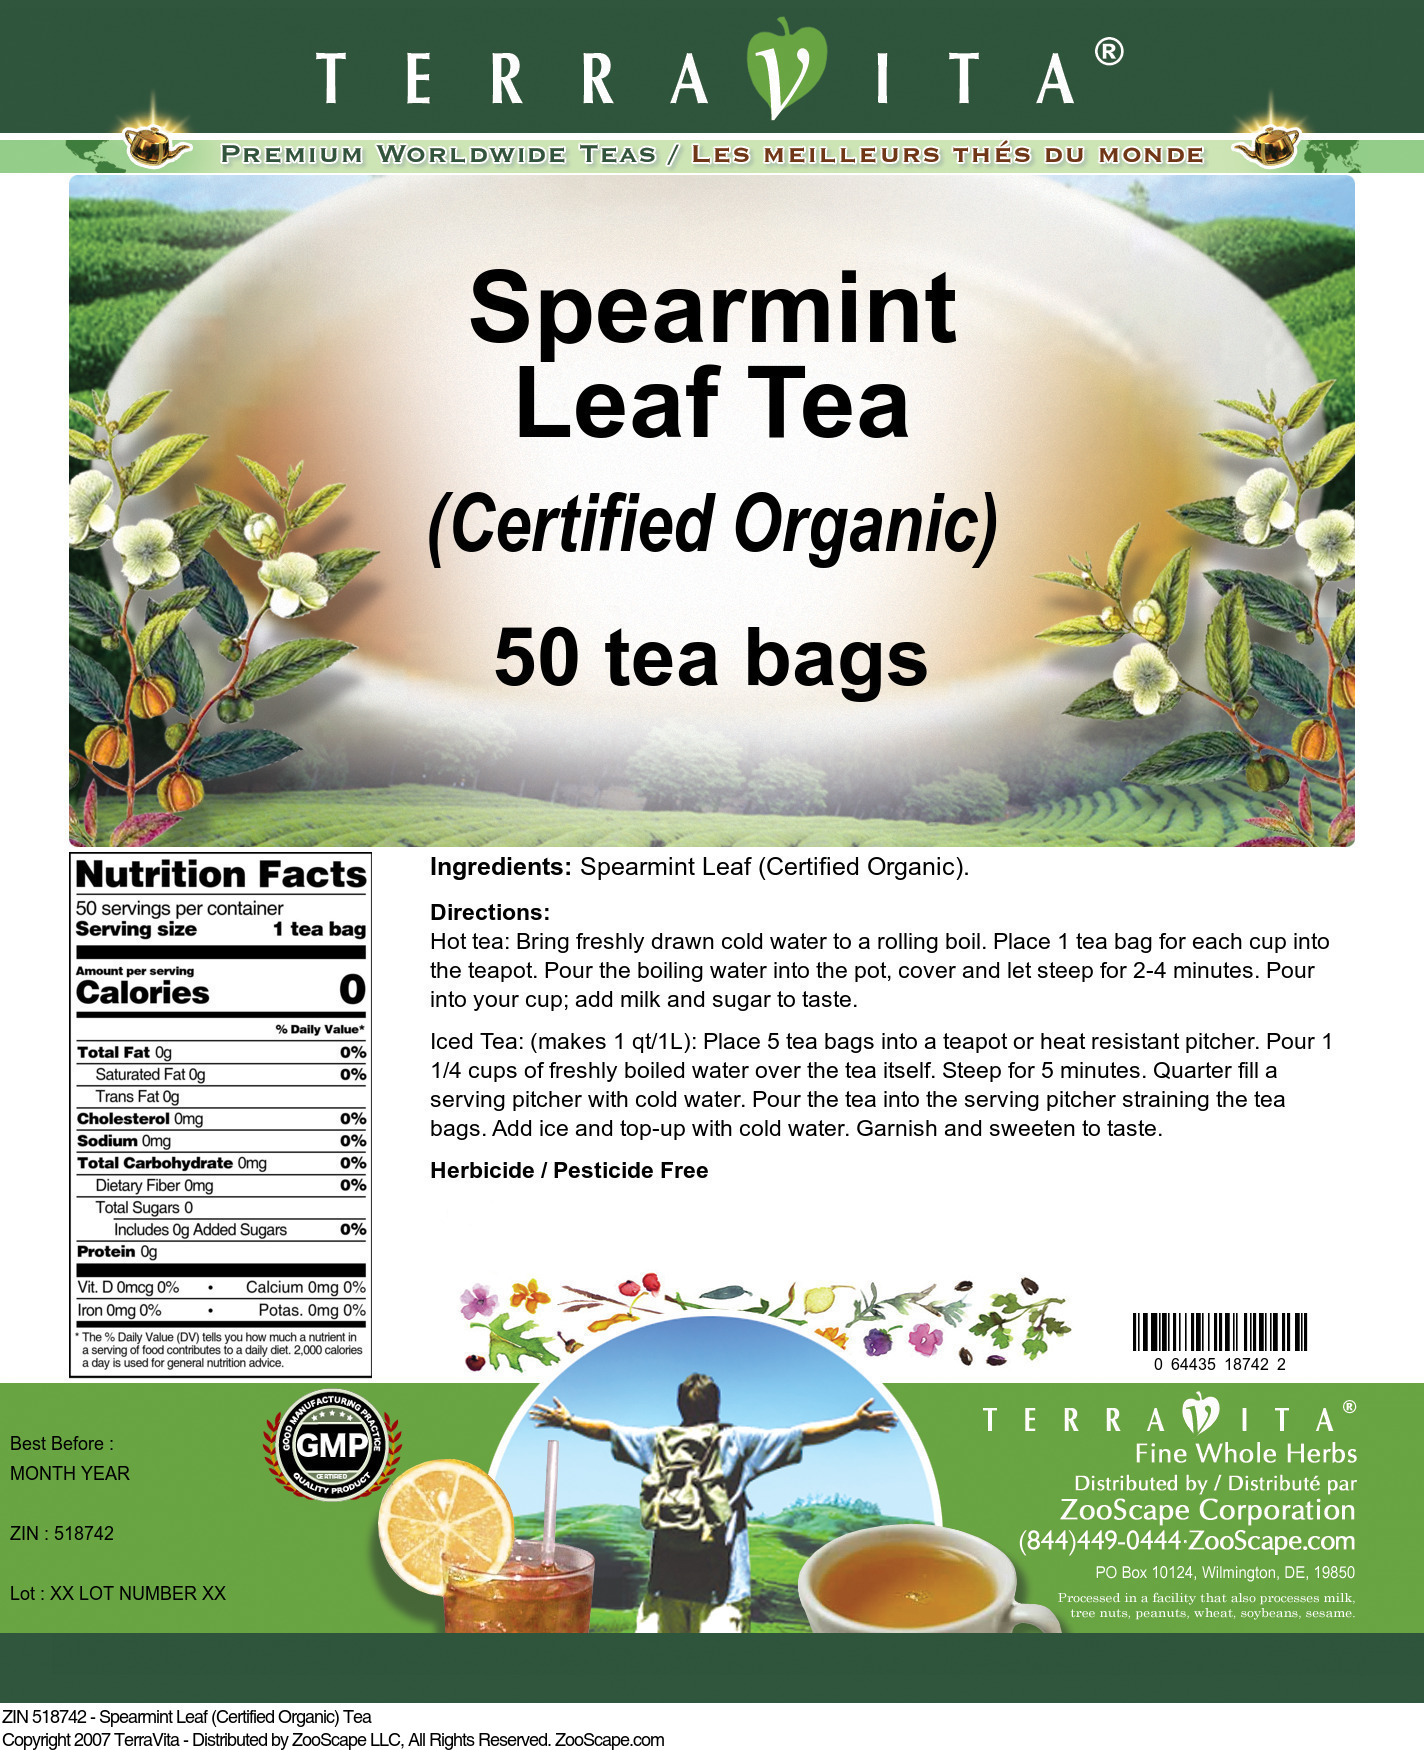 Spearmint Leaf (Certified Organic) Tea - Label